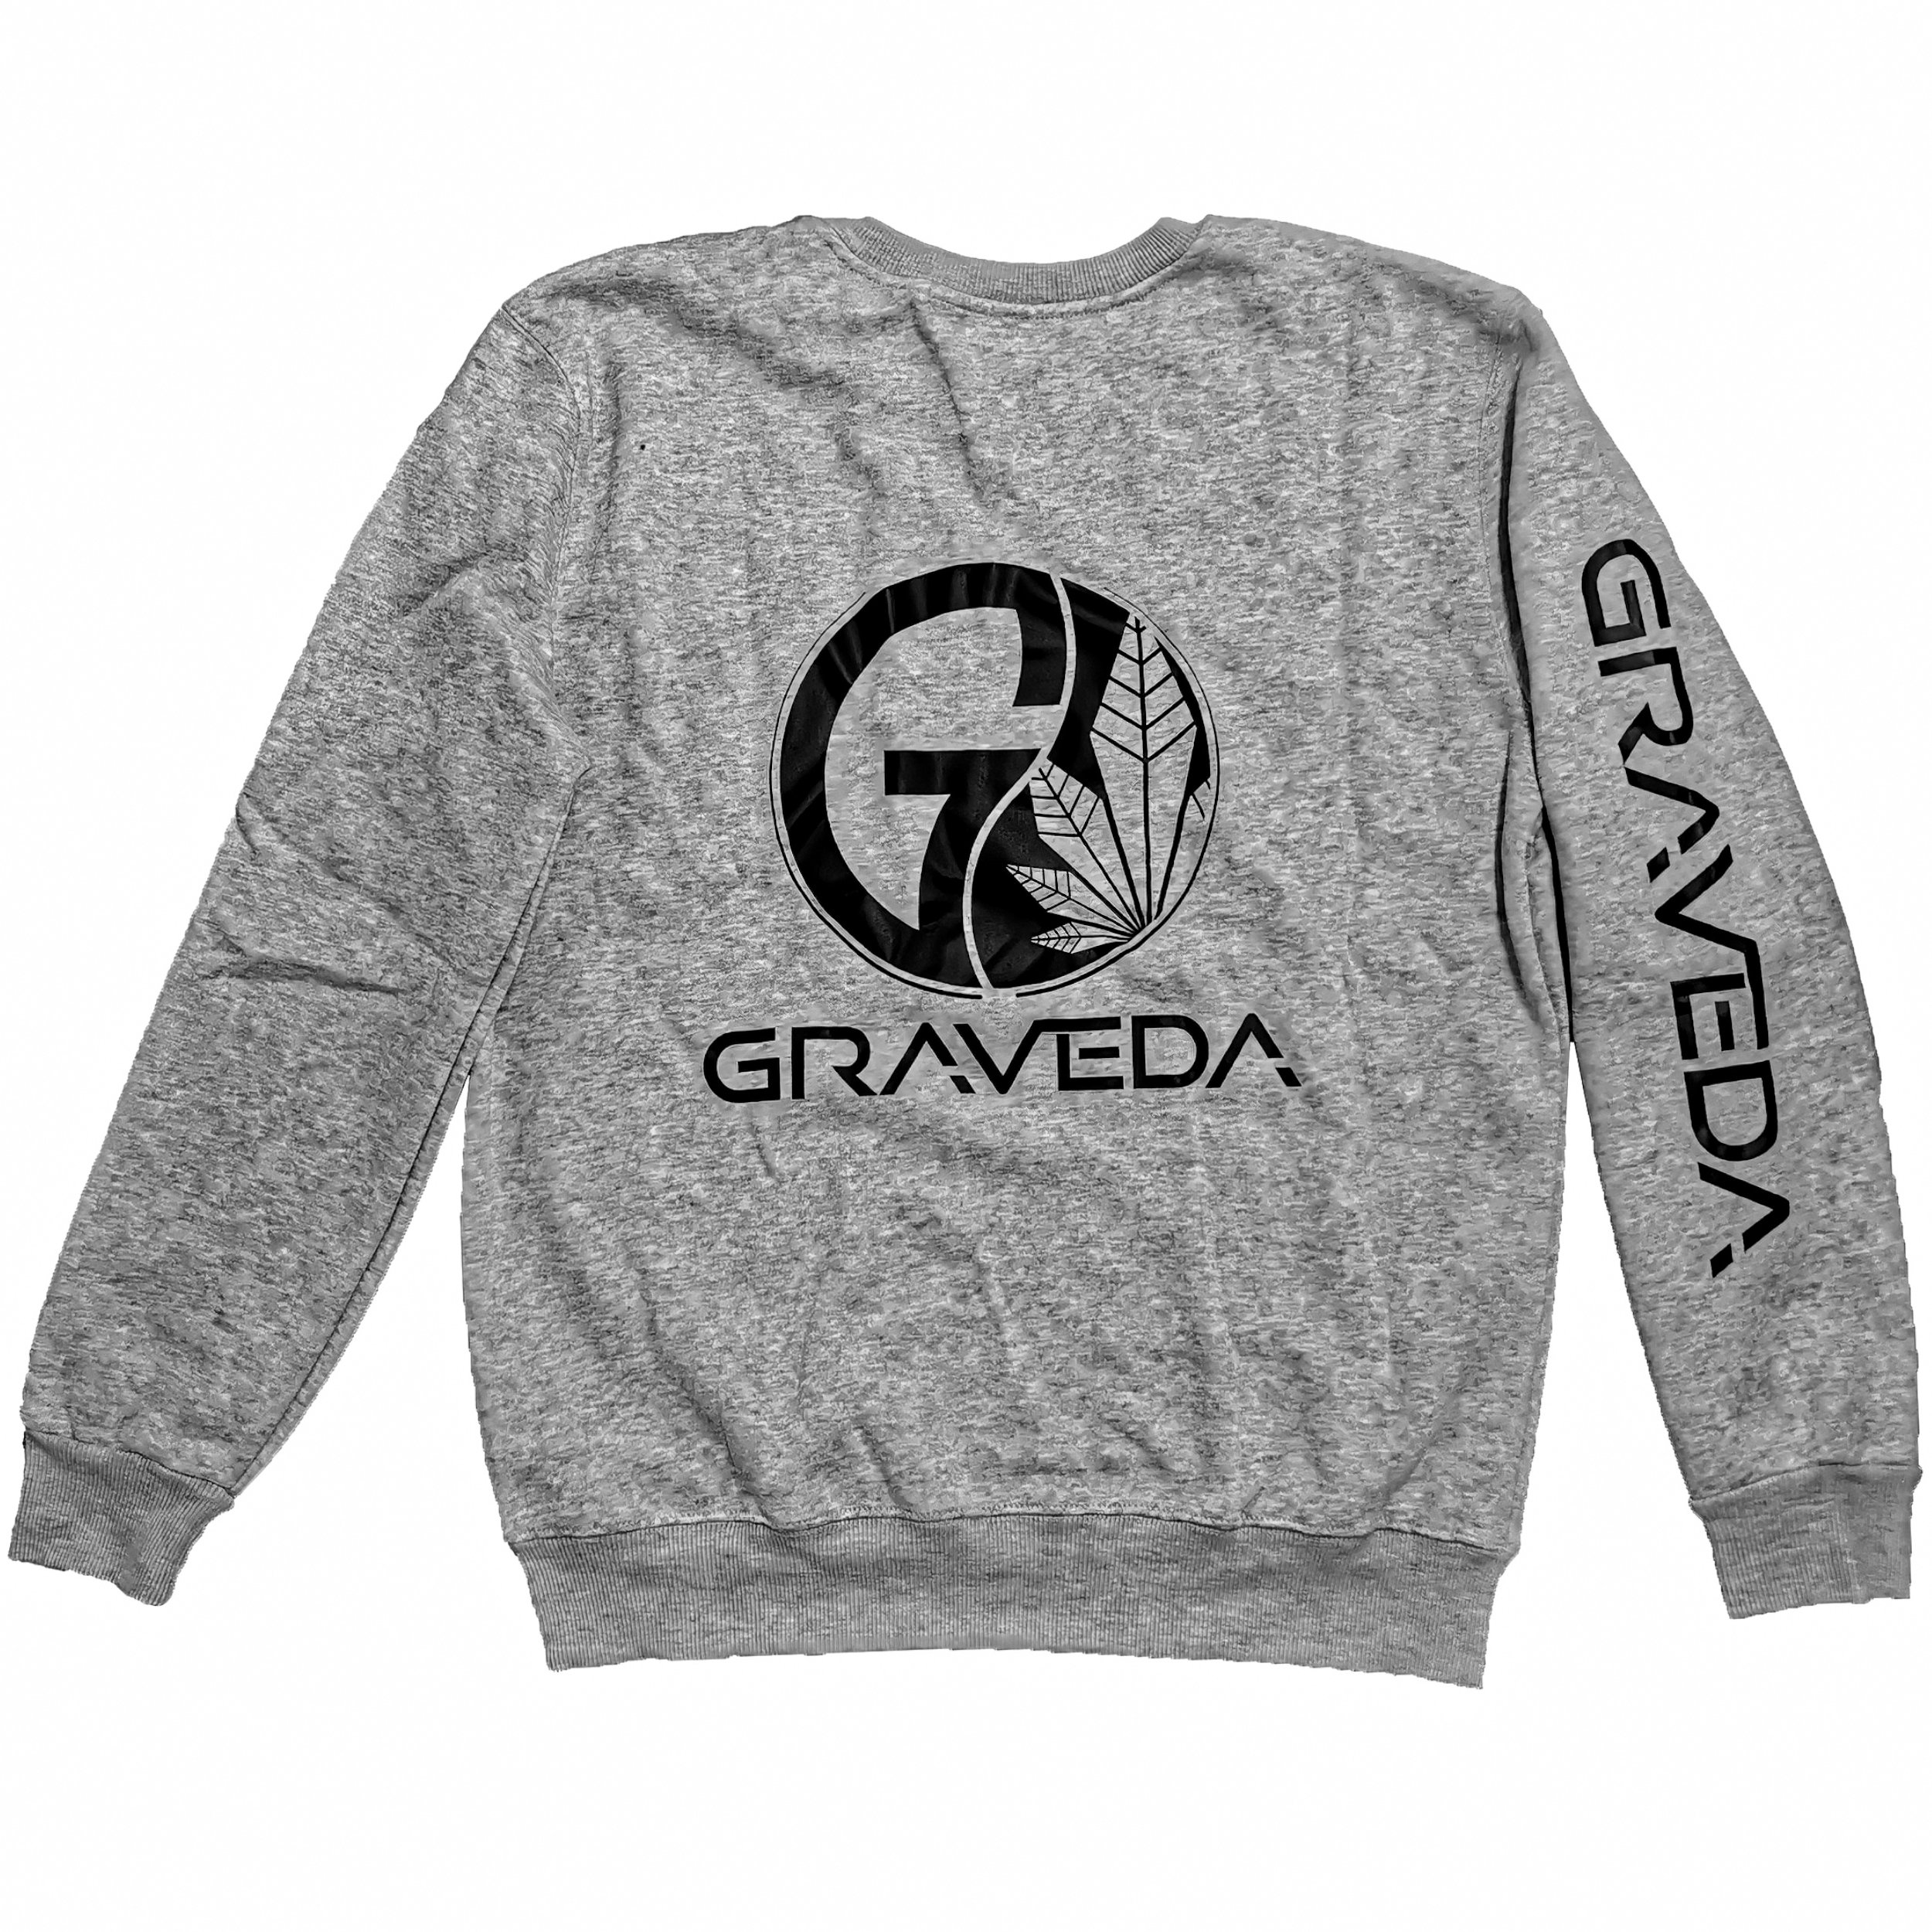 Graveda Sweatshirt, 280g/m², in schwarz oder grau grau L